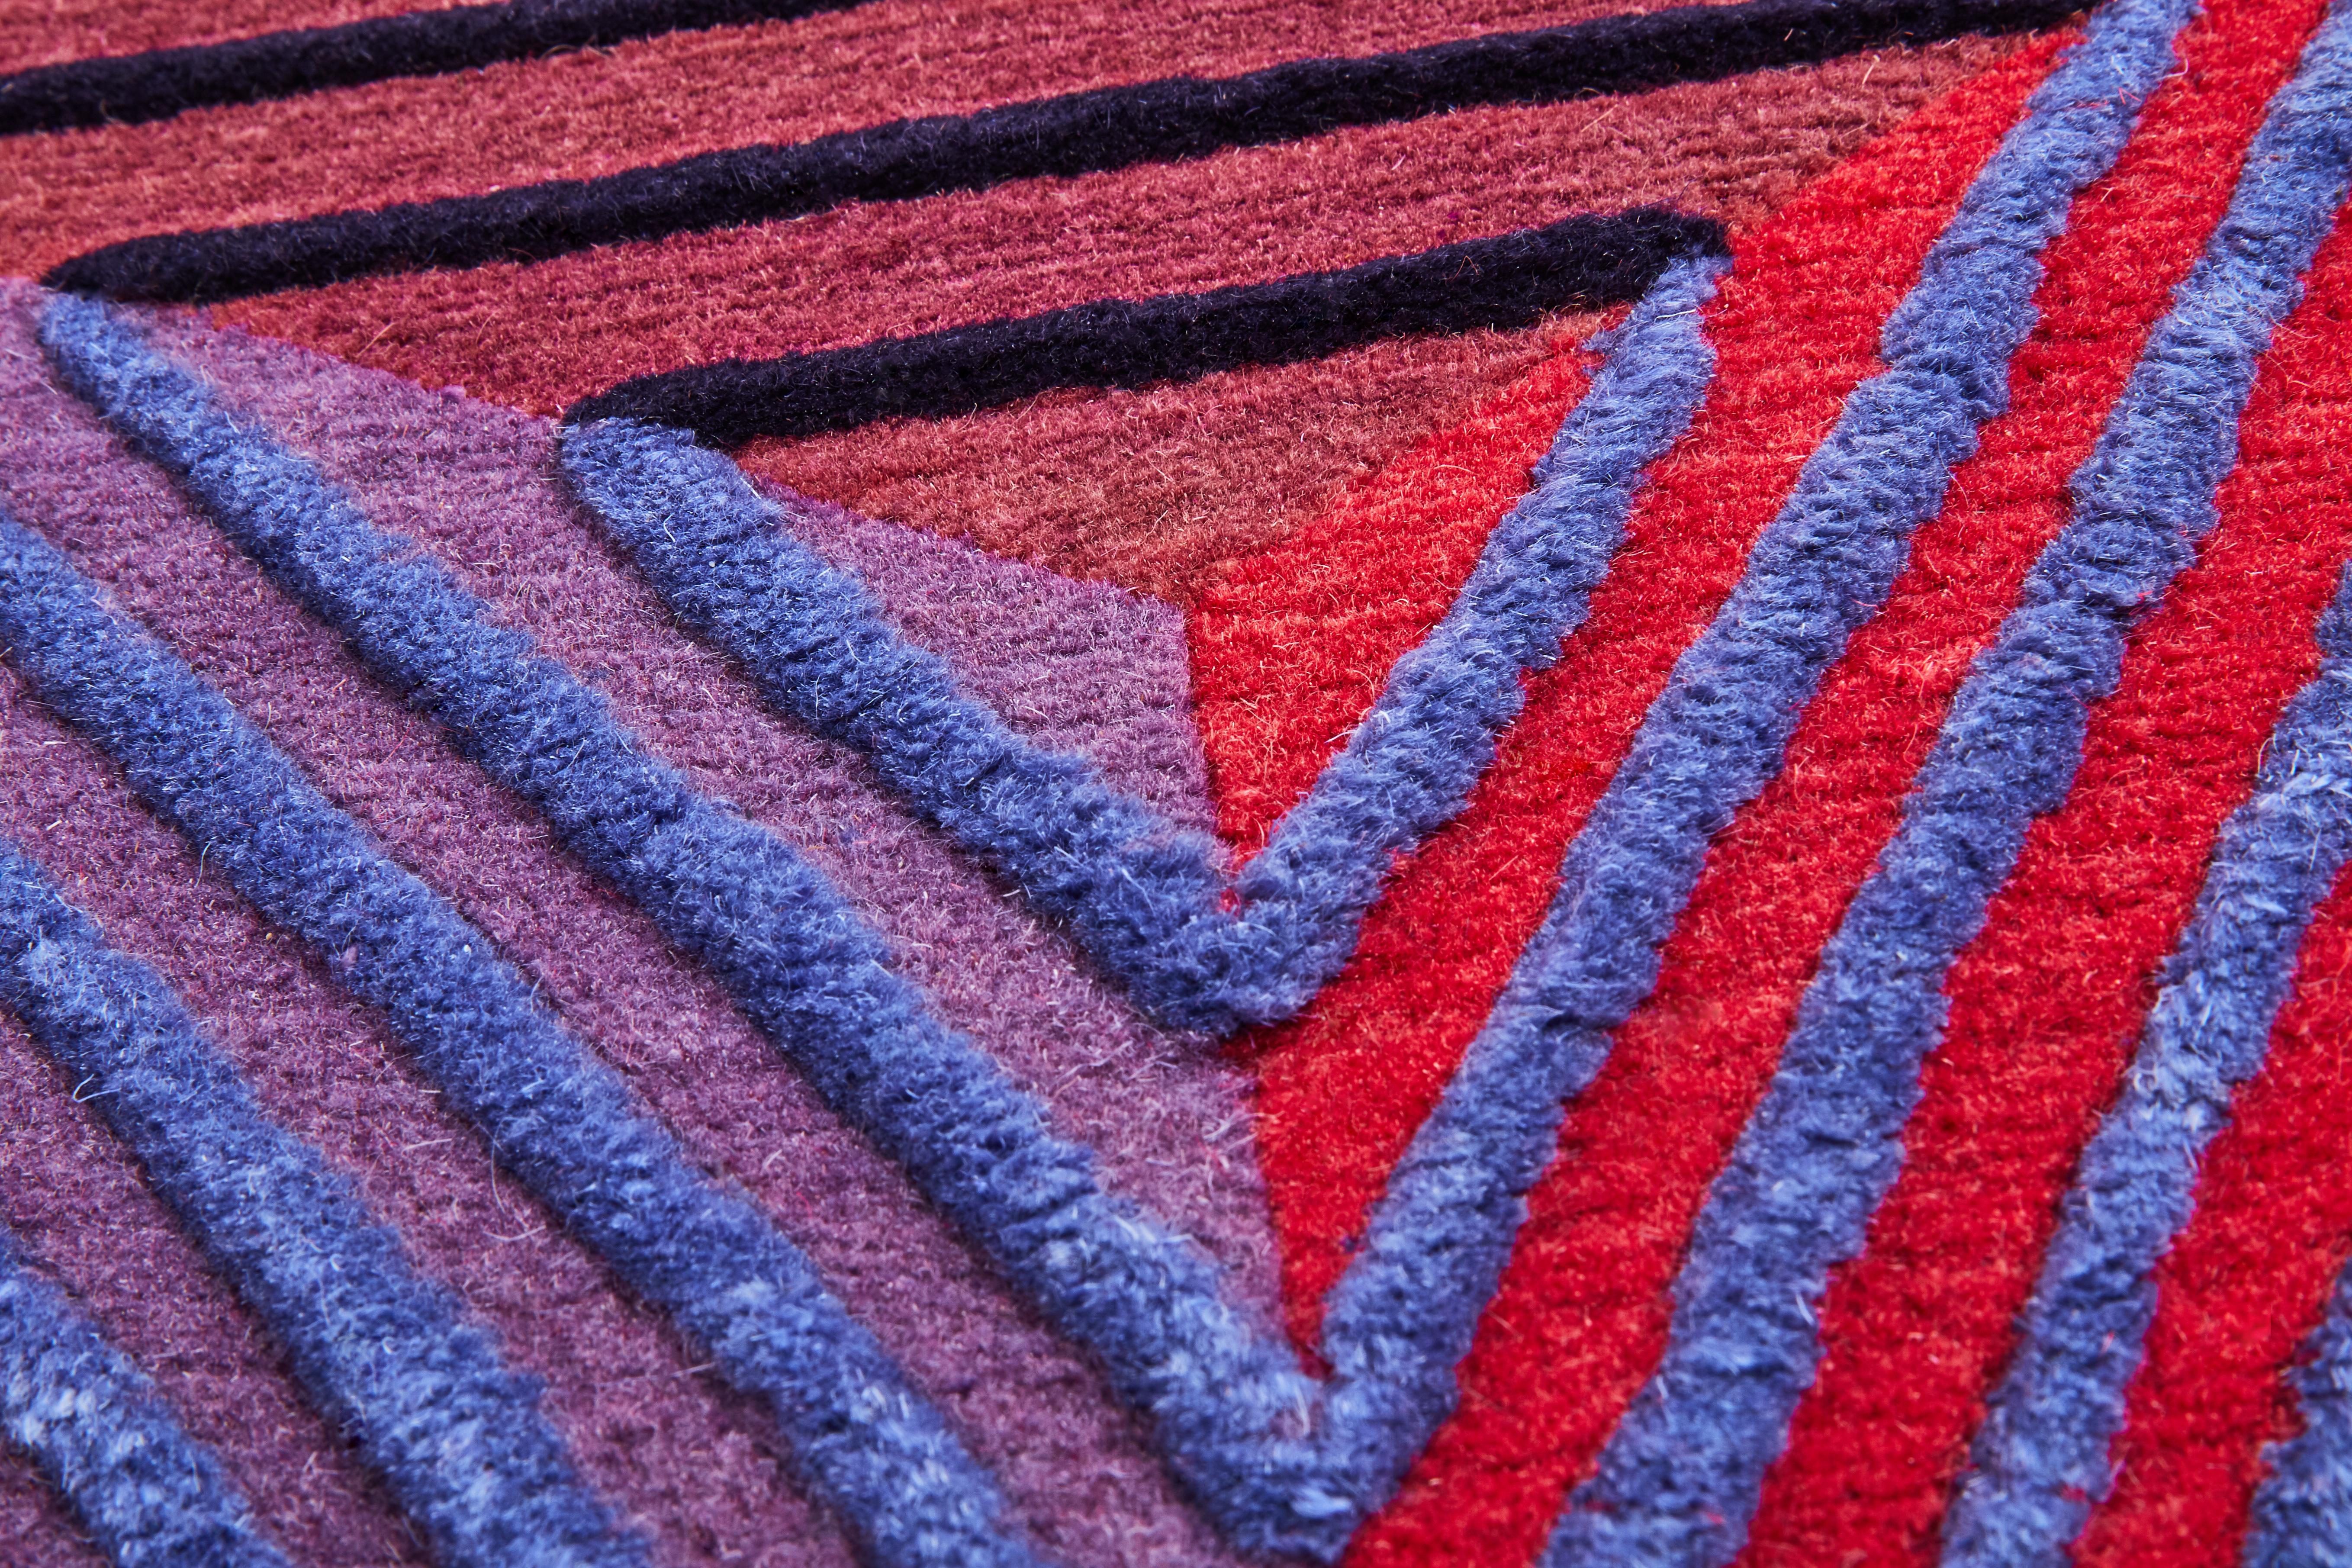 Nepalese Isocaedro Carpet, Limit Ed, Handknot, 200kn, Wool+Bamboo Silk, Lanzavecchia+Wai For Sale